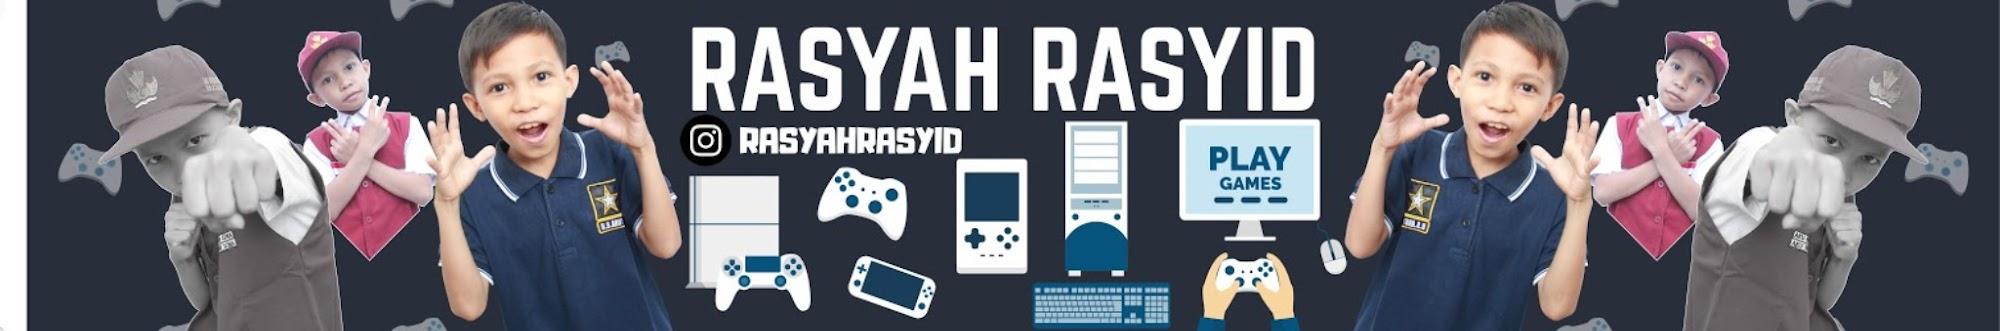 Rasyah Rasyid